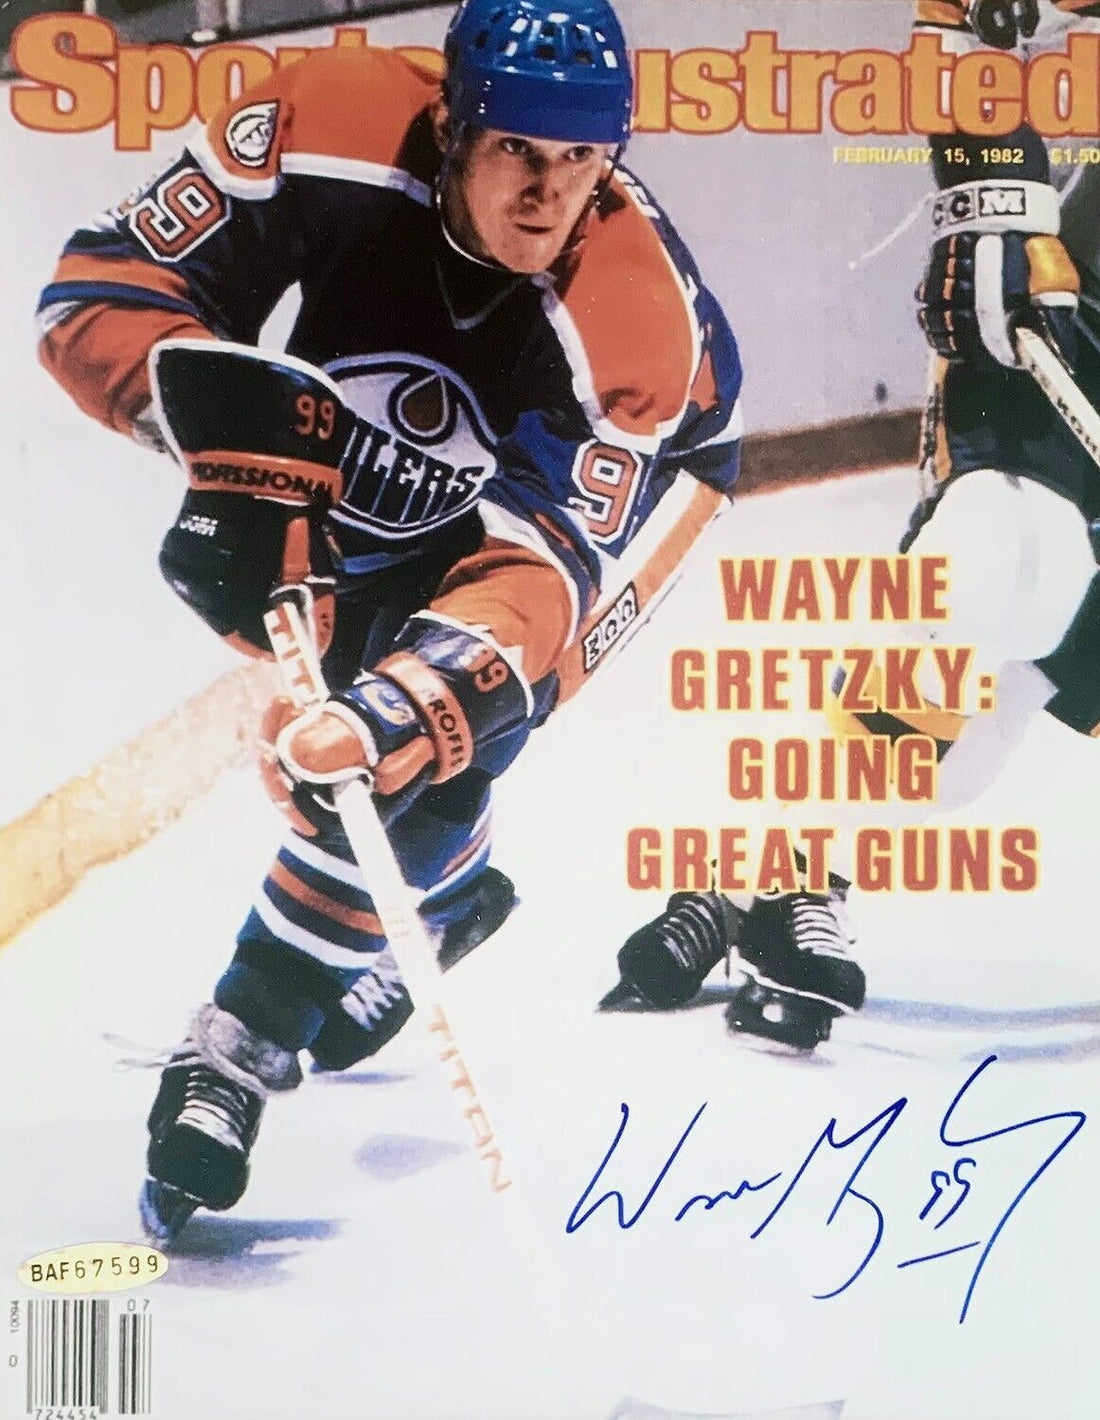 Wayne Gretzky Signed Sports Illustrated Magazine Cover. Upper Deck with UDA Box